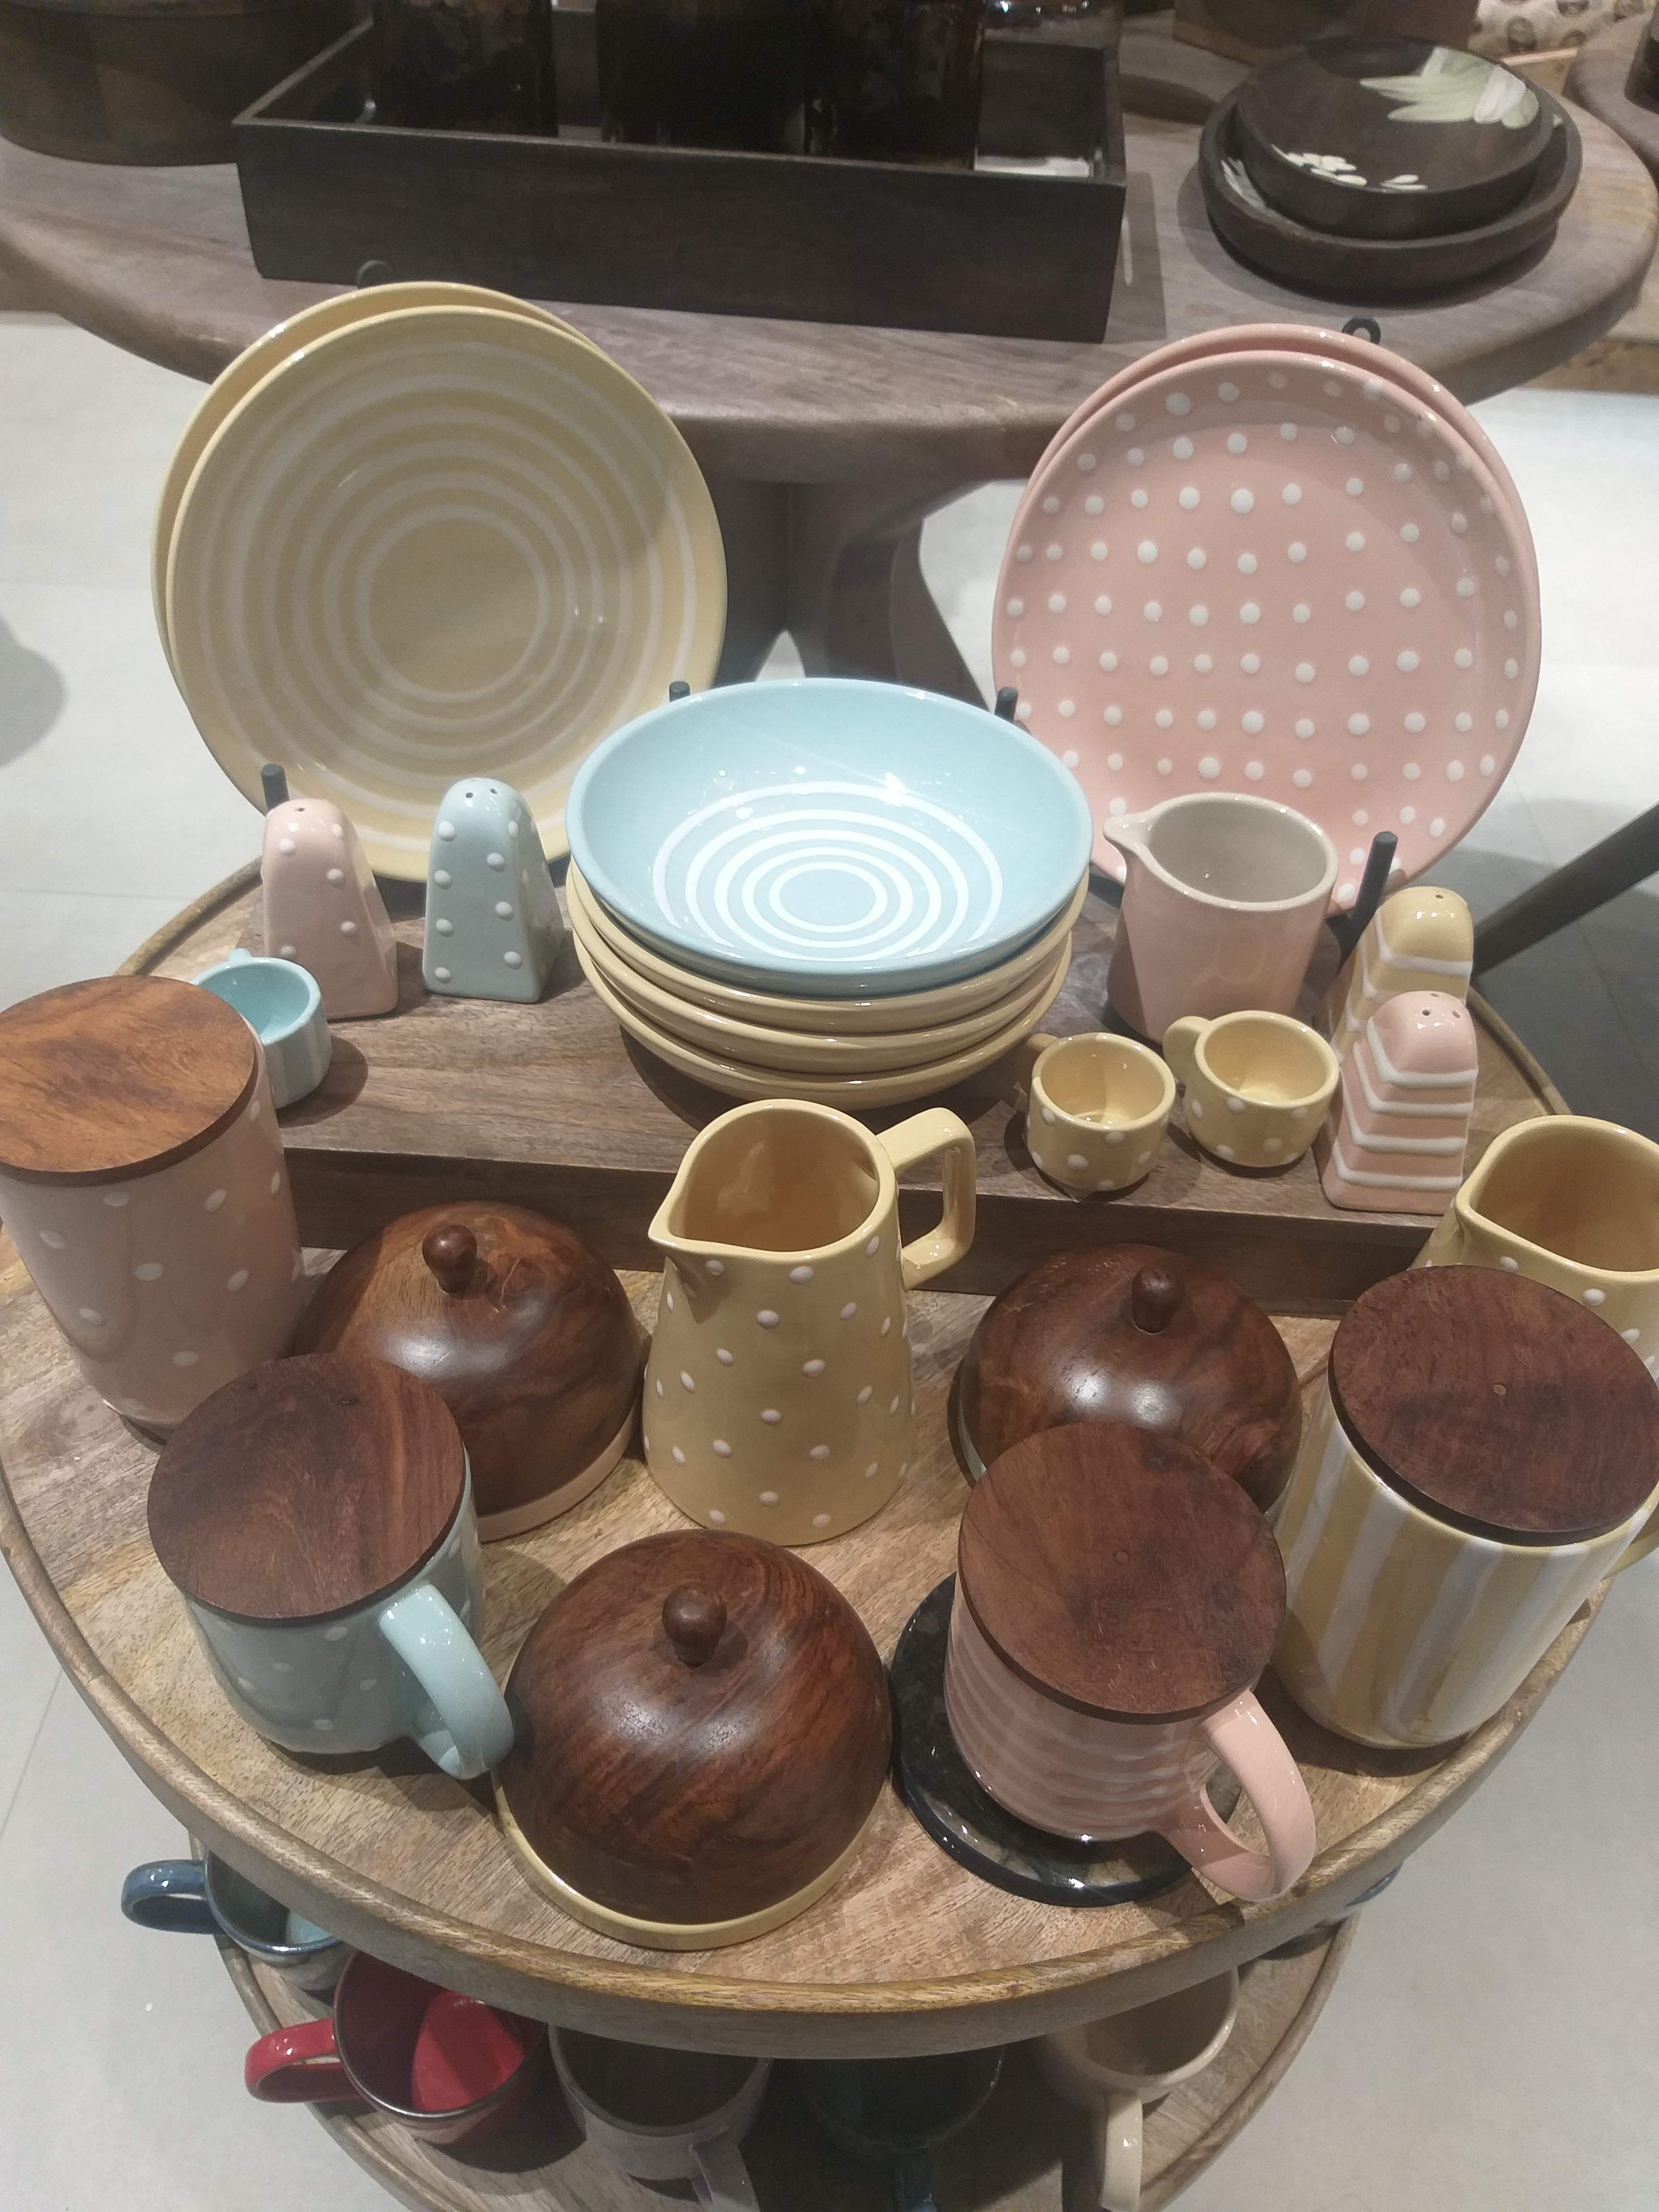 earthenware,Pottery,Ceramic,Copper,Bowl,Wood,Metal,Tableware,Dinnerware set